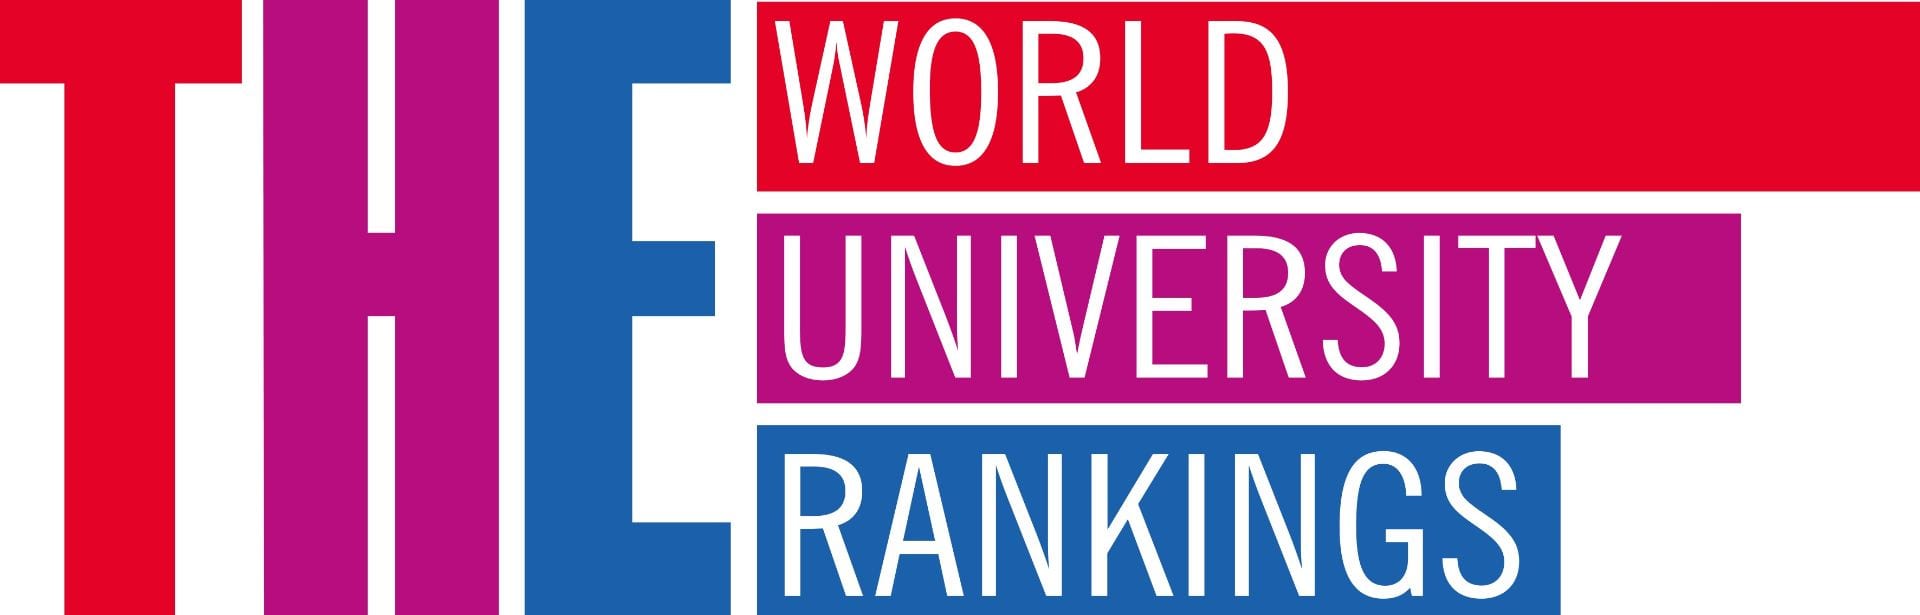 The World University Rankings